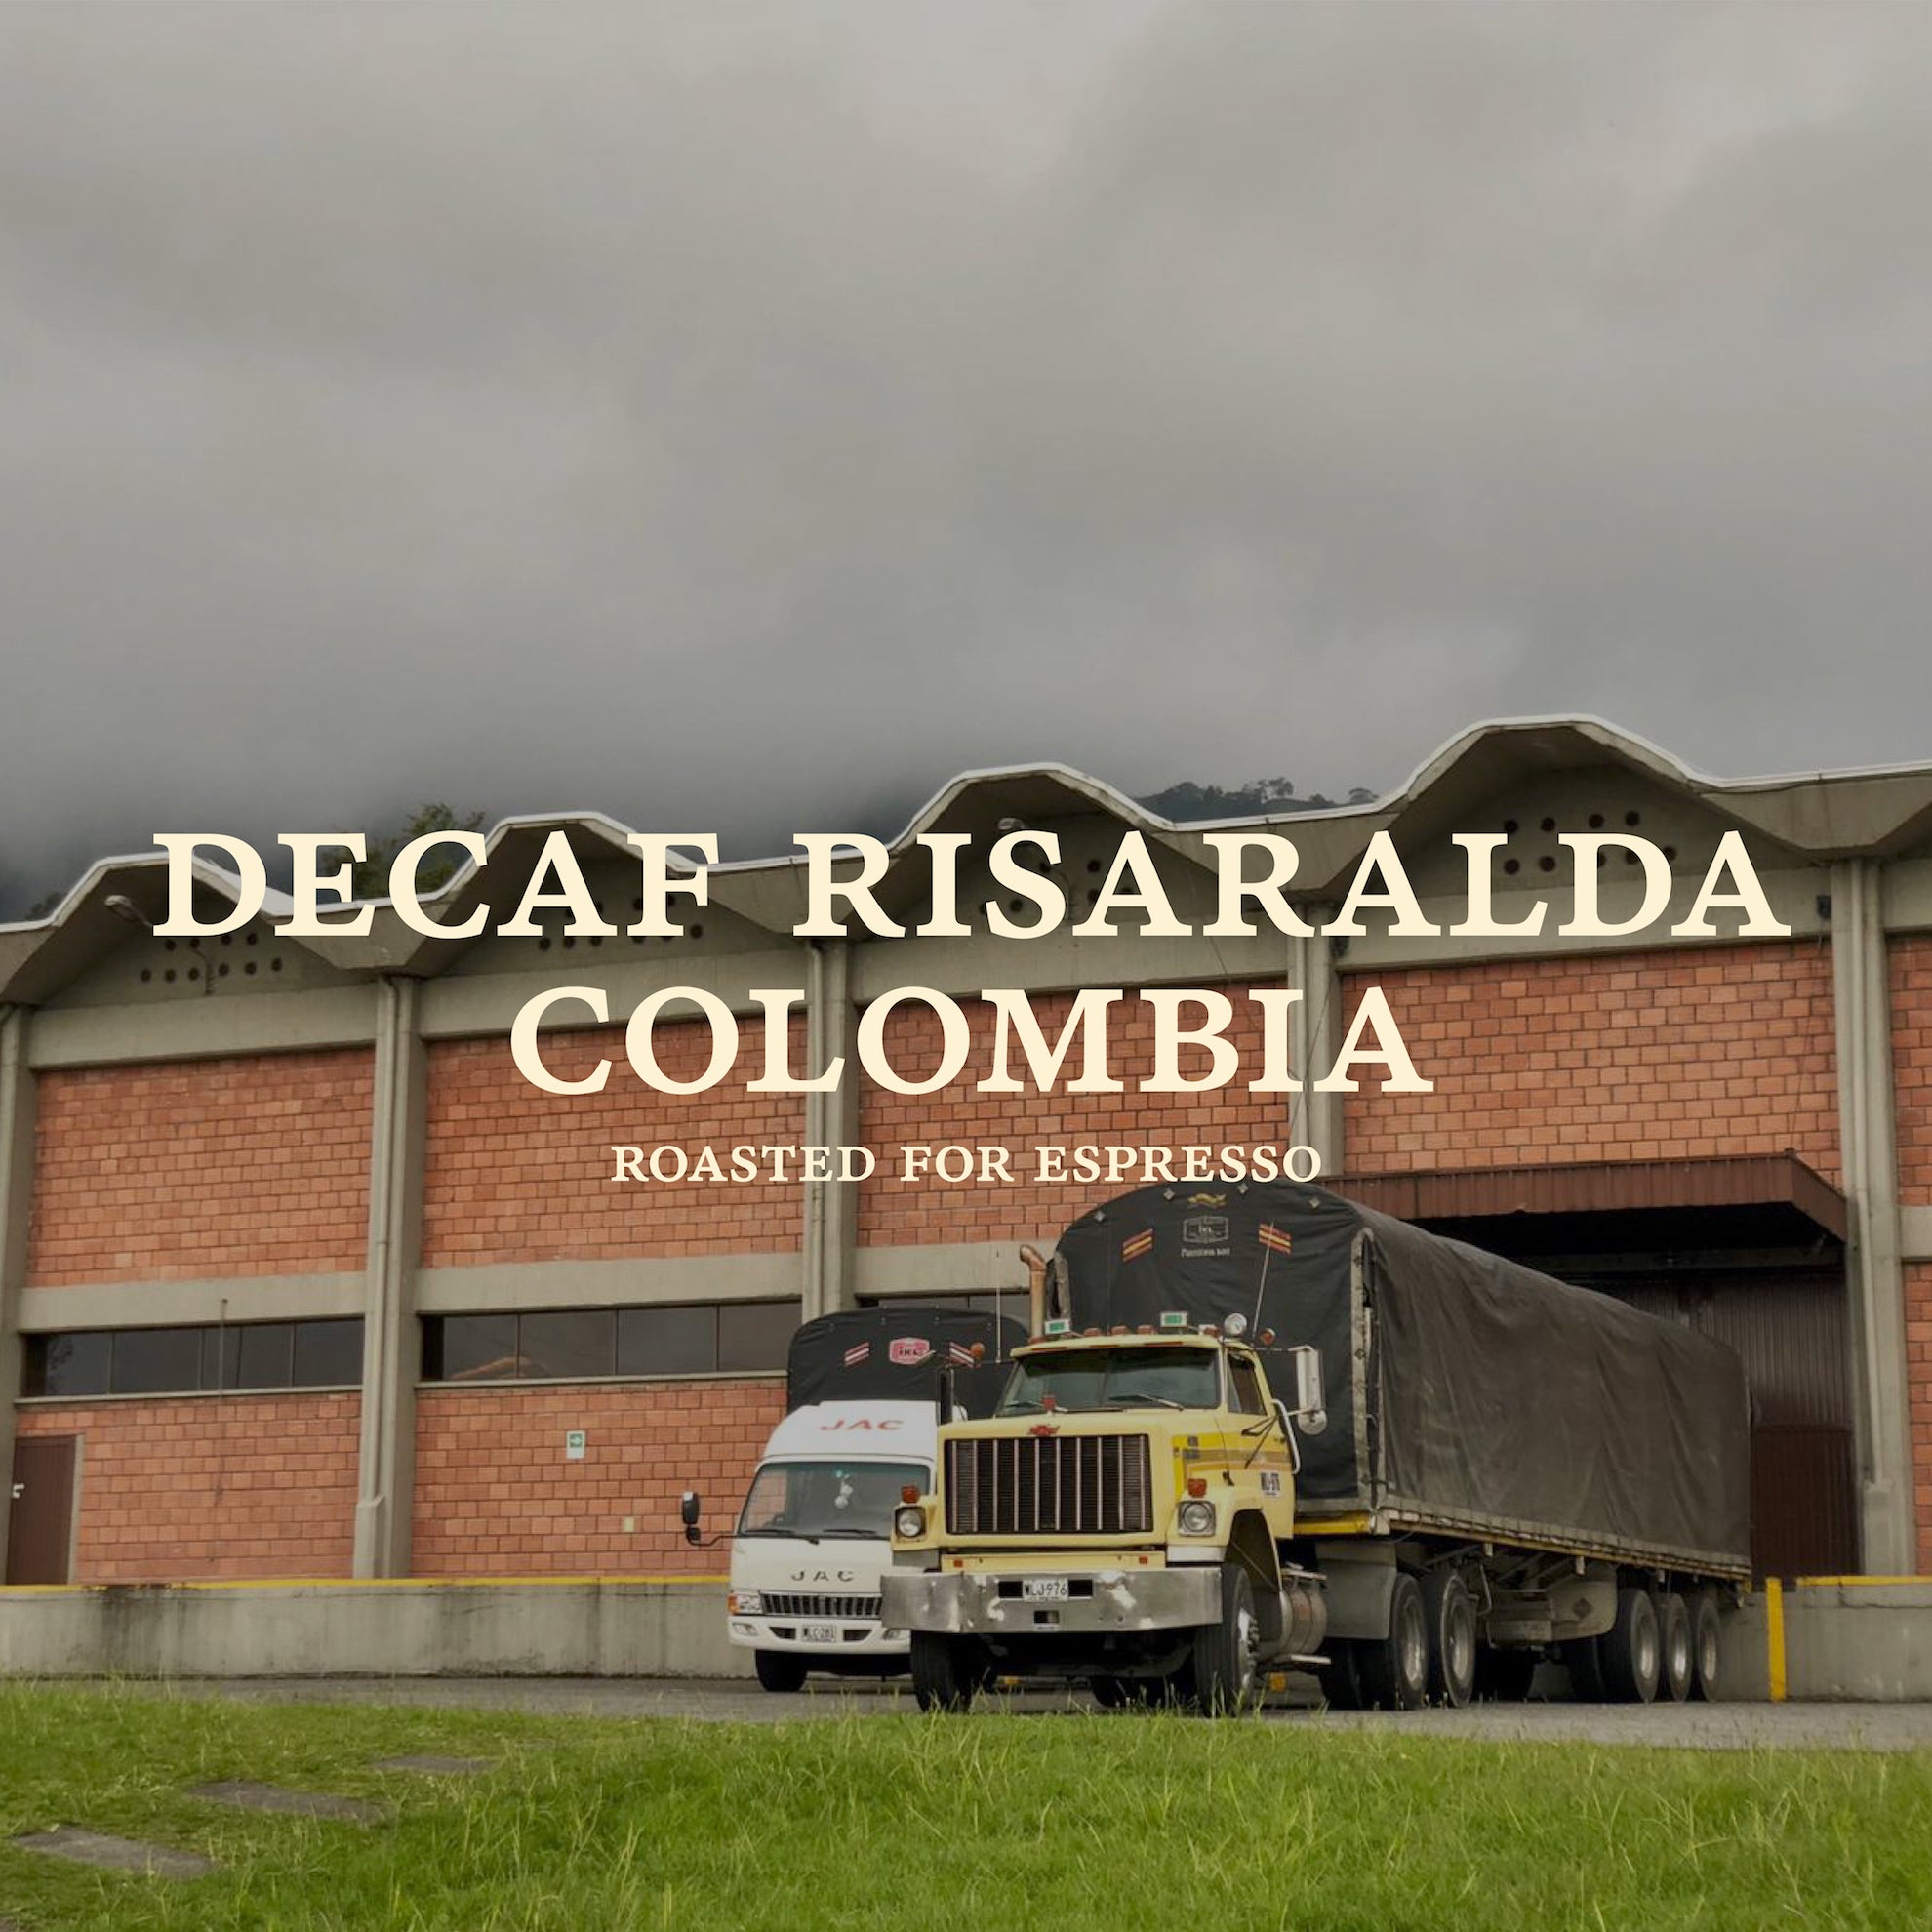 Risaralda Decaf, Colombia